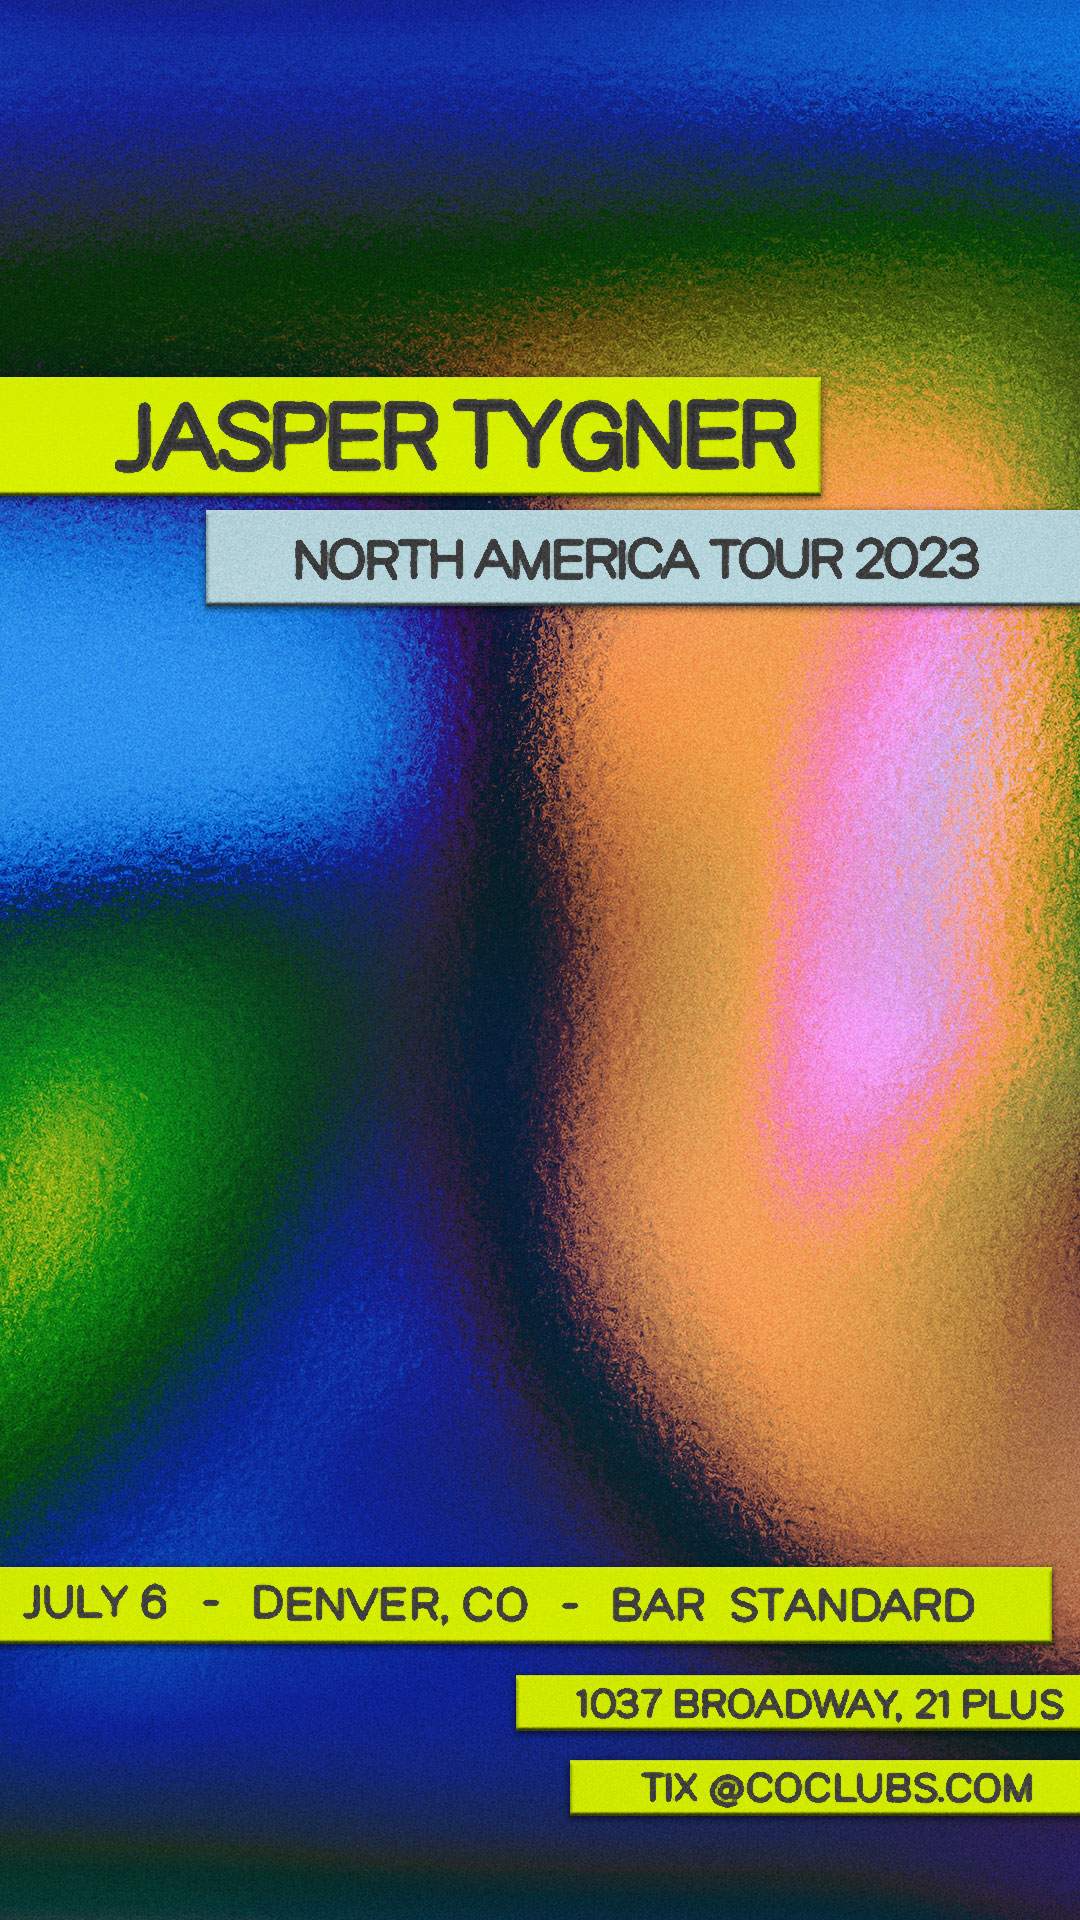 TheHundred Presents - STEAM feat. Jasper Tygner - North American Tour - フライヤー表